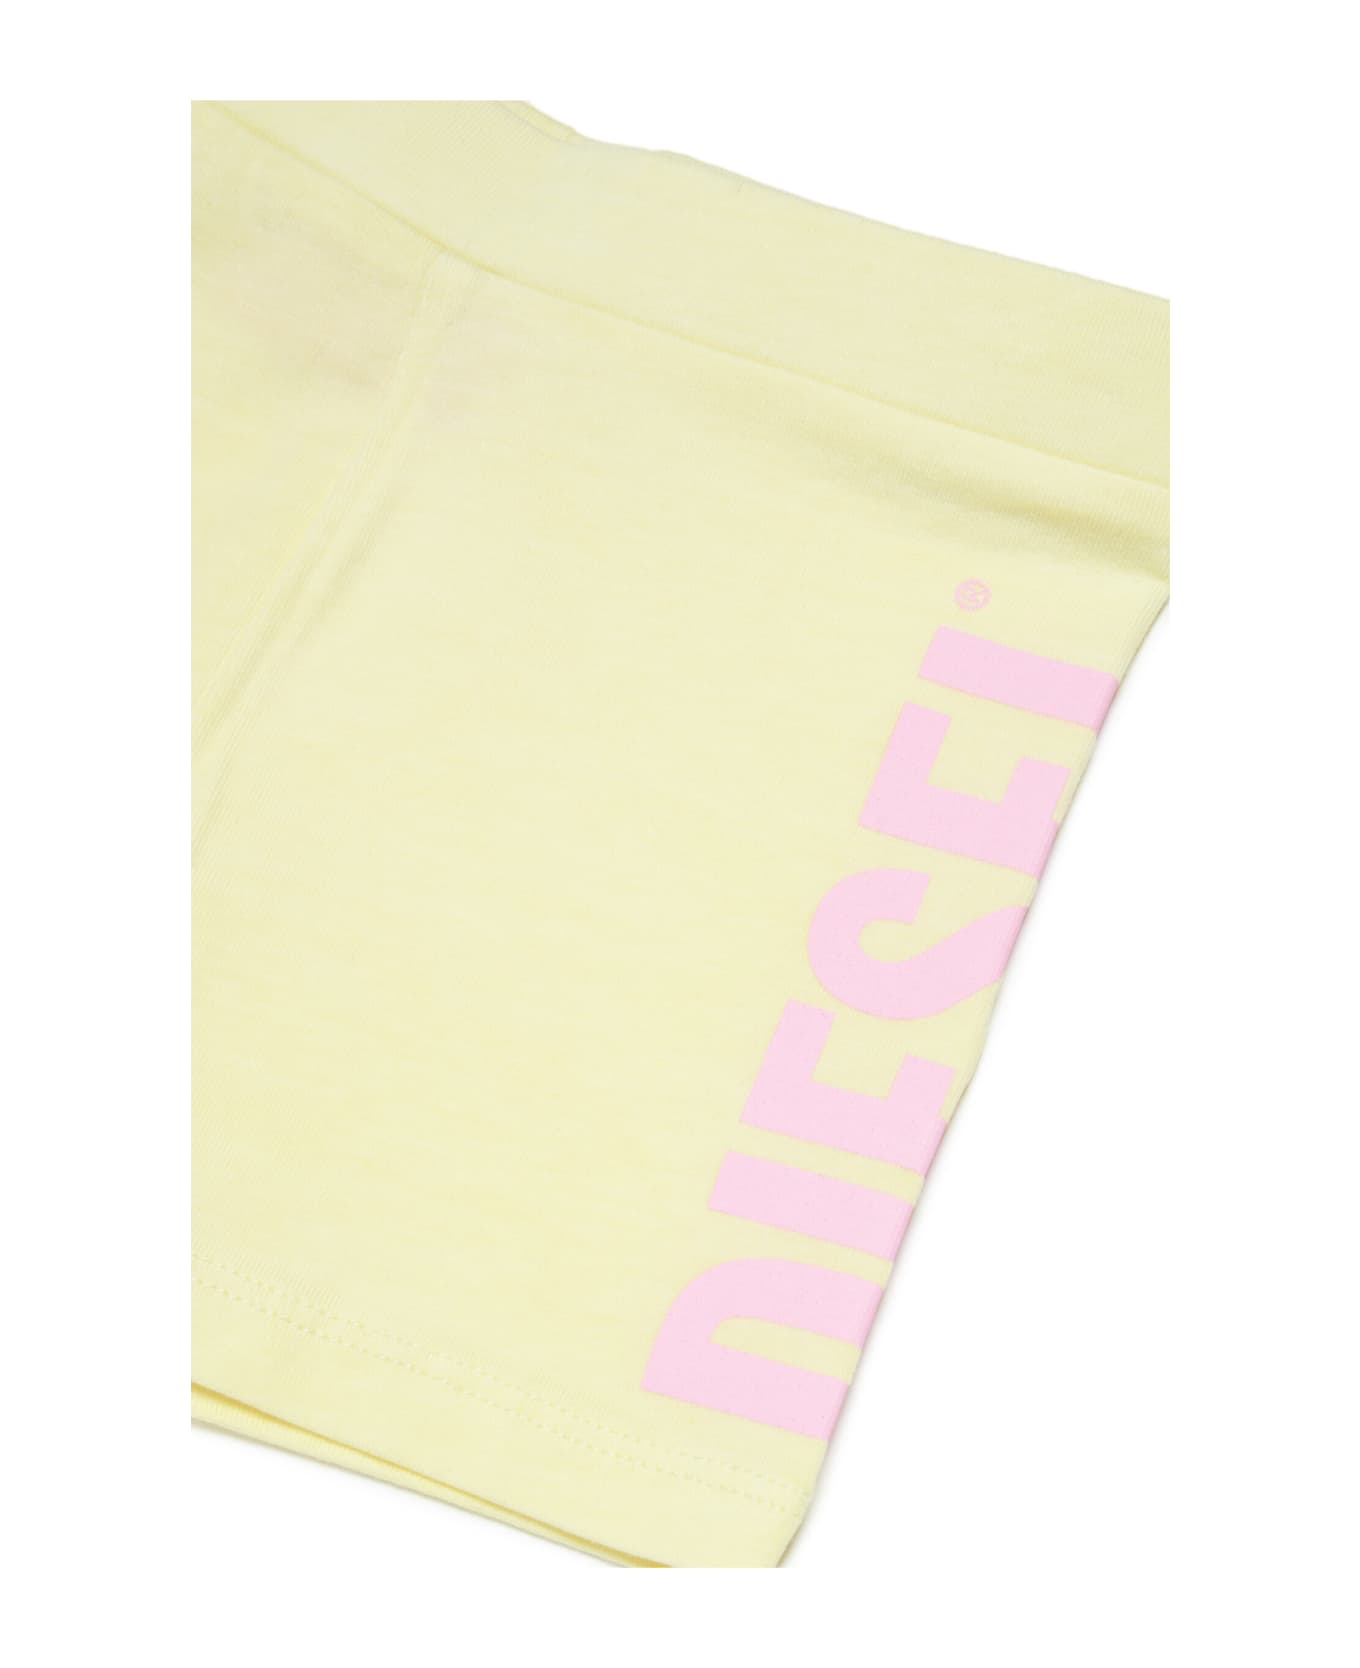 Diesel Plettib Liv Shorts Diesel Yellow Cotton Cycling Shorts With Logo - Lemonade